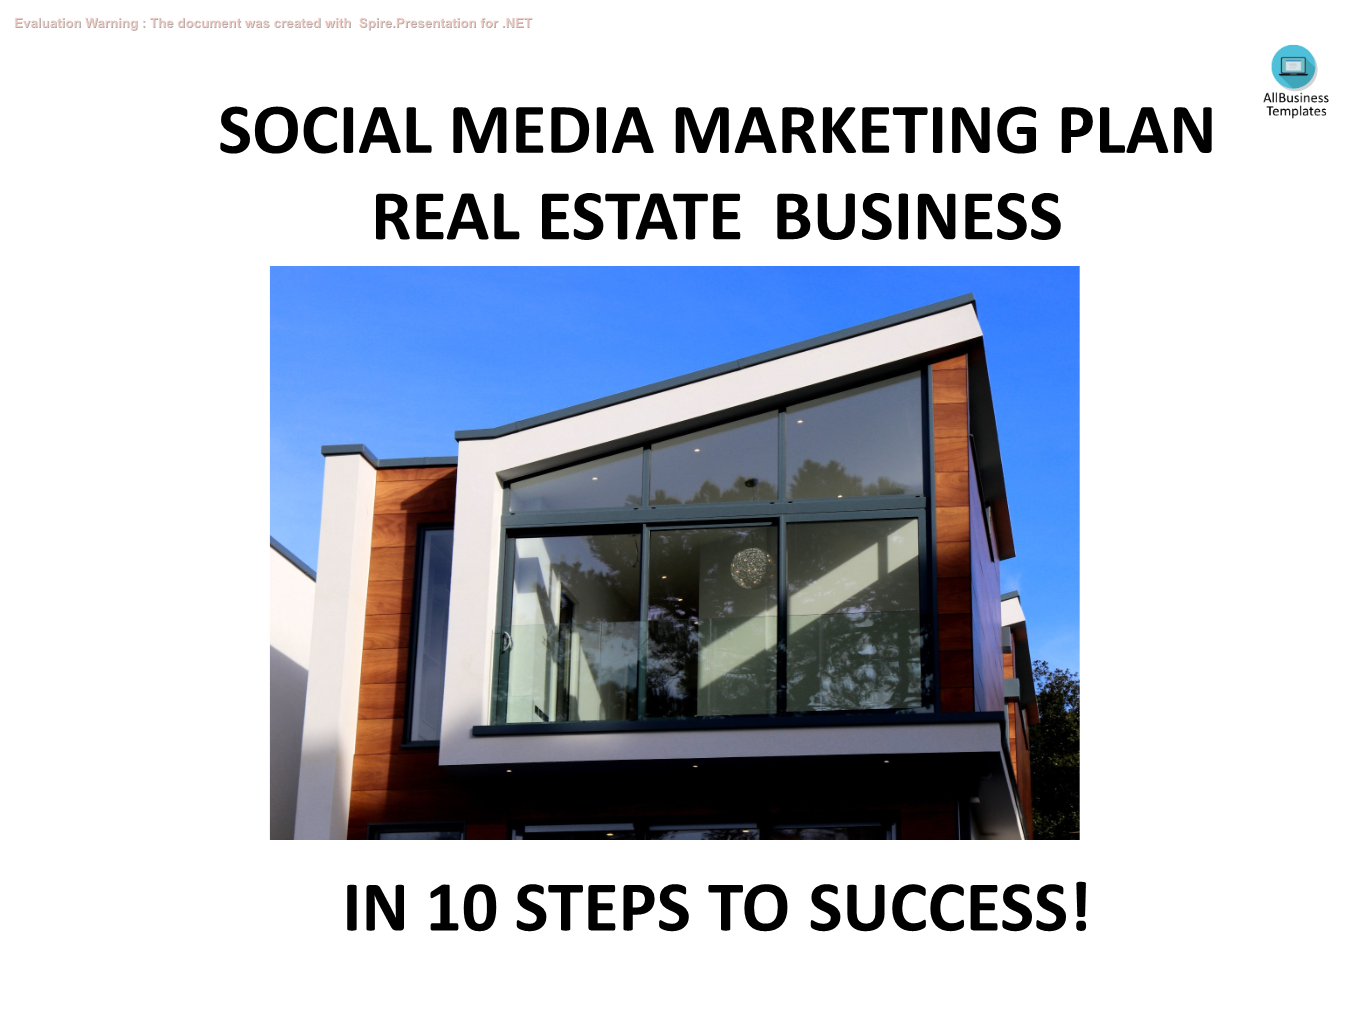 real estate social media marketing plan template